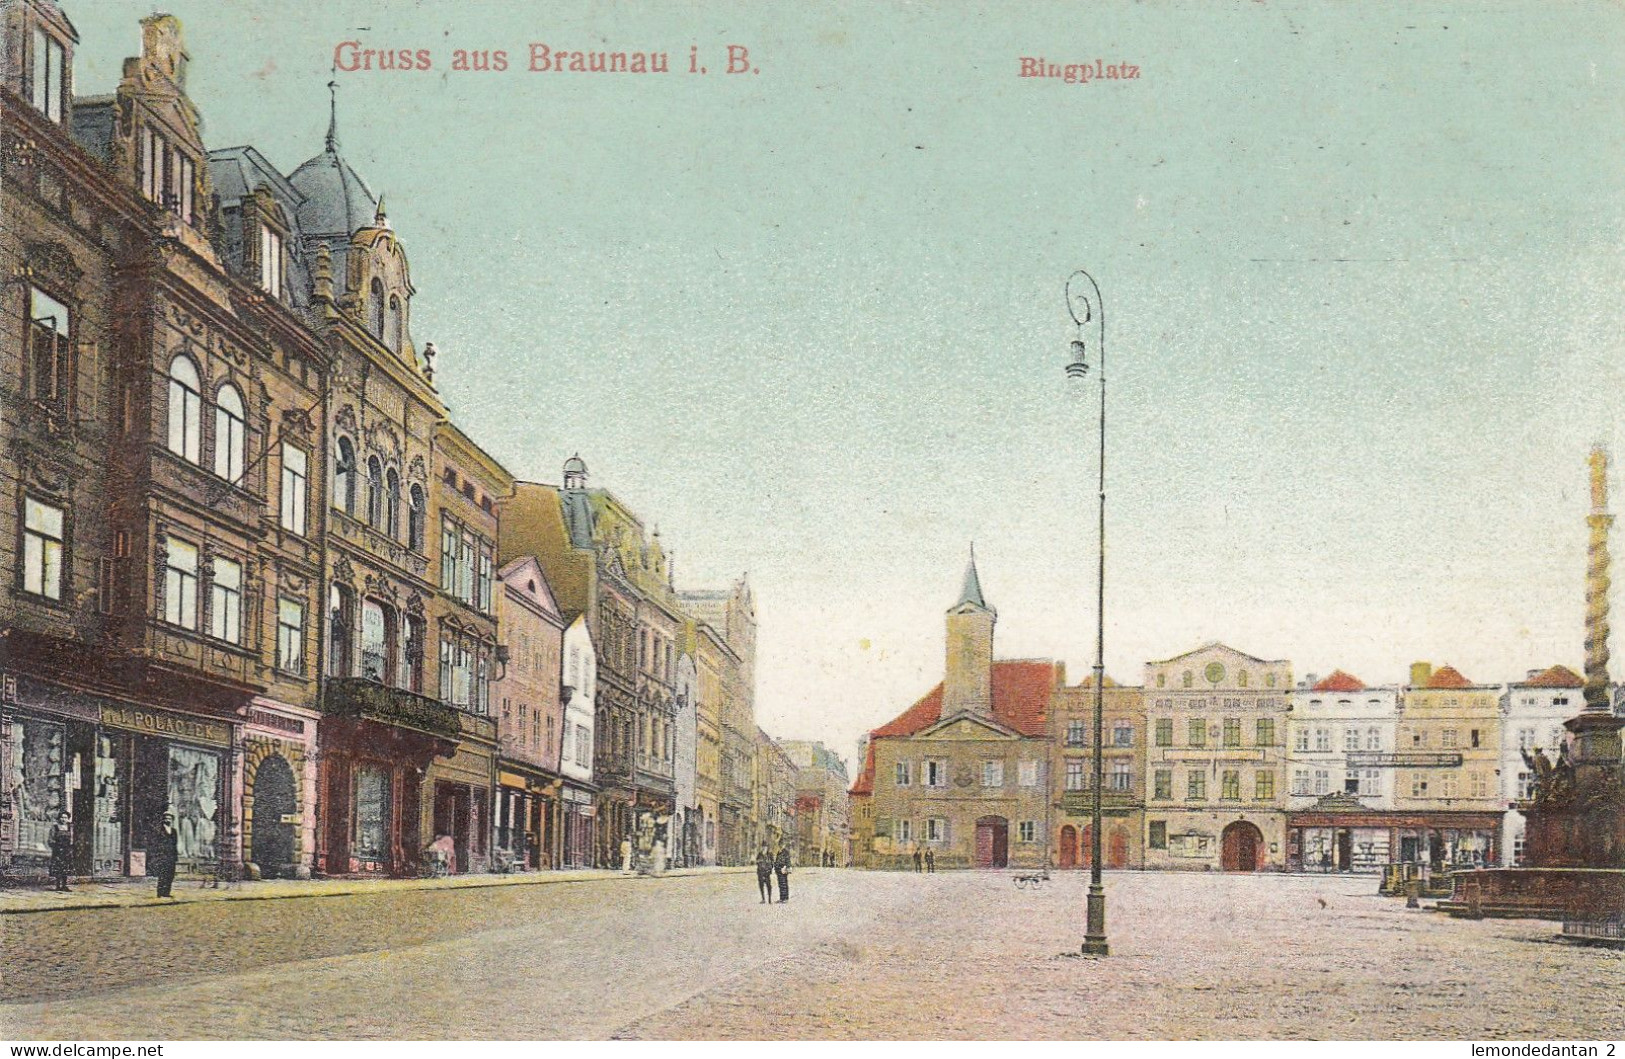 Gruss Aus Braunau I. B. - Ringplatz - Repubblica Ceca